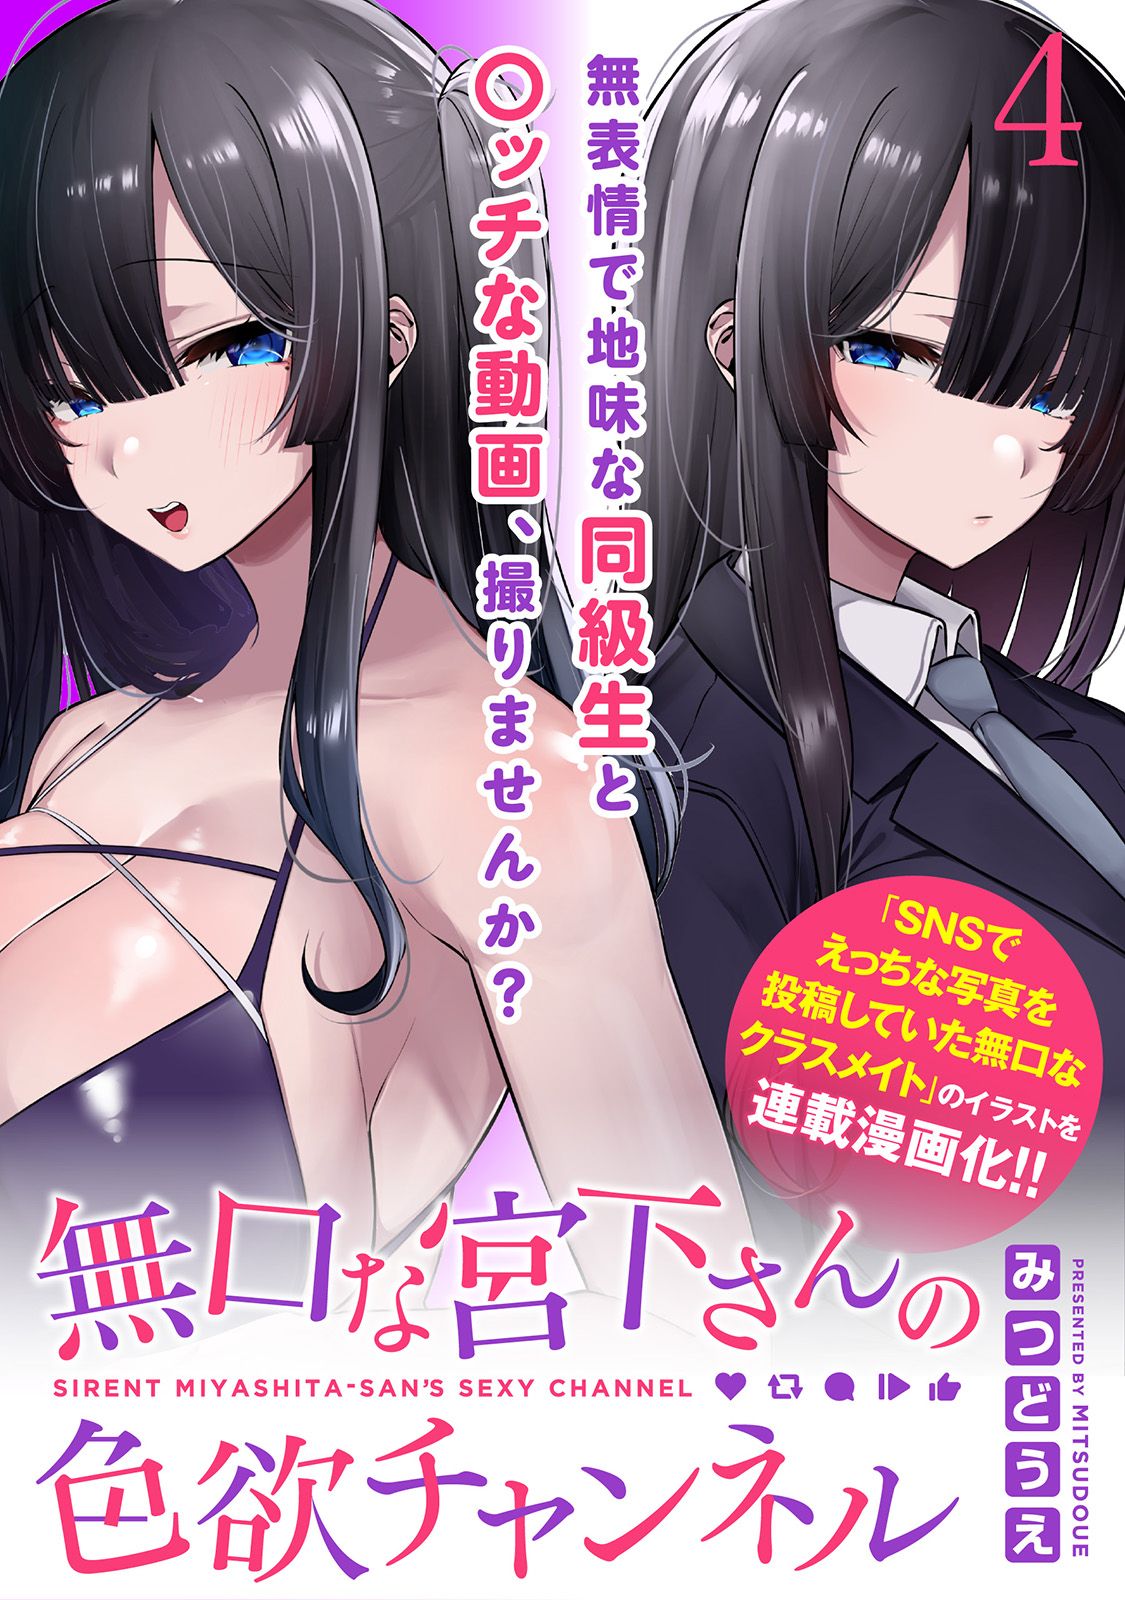 Silent Miyashita-San's Sexy Channel - Page 2